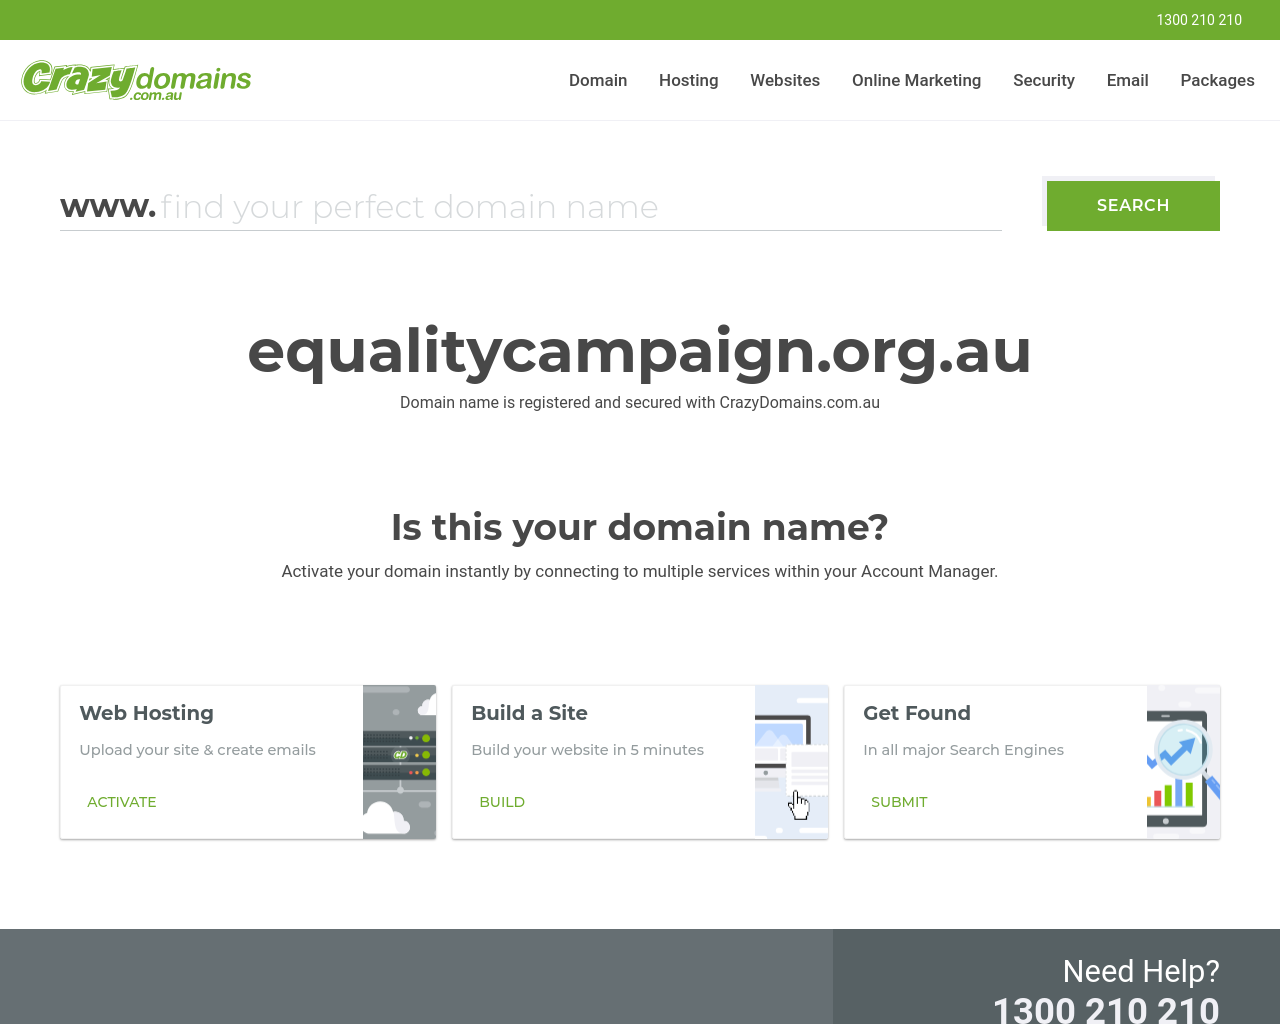 equalitycampaign.org.au